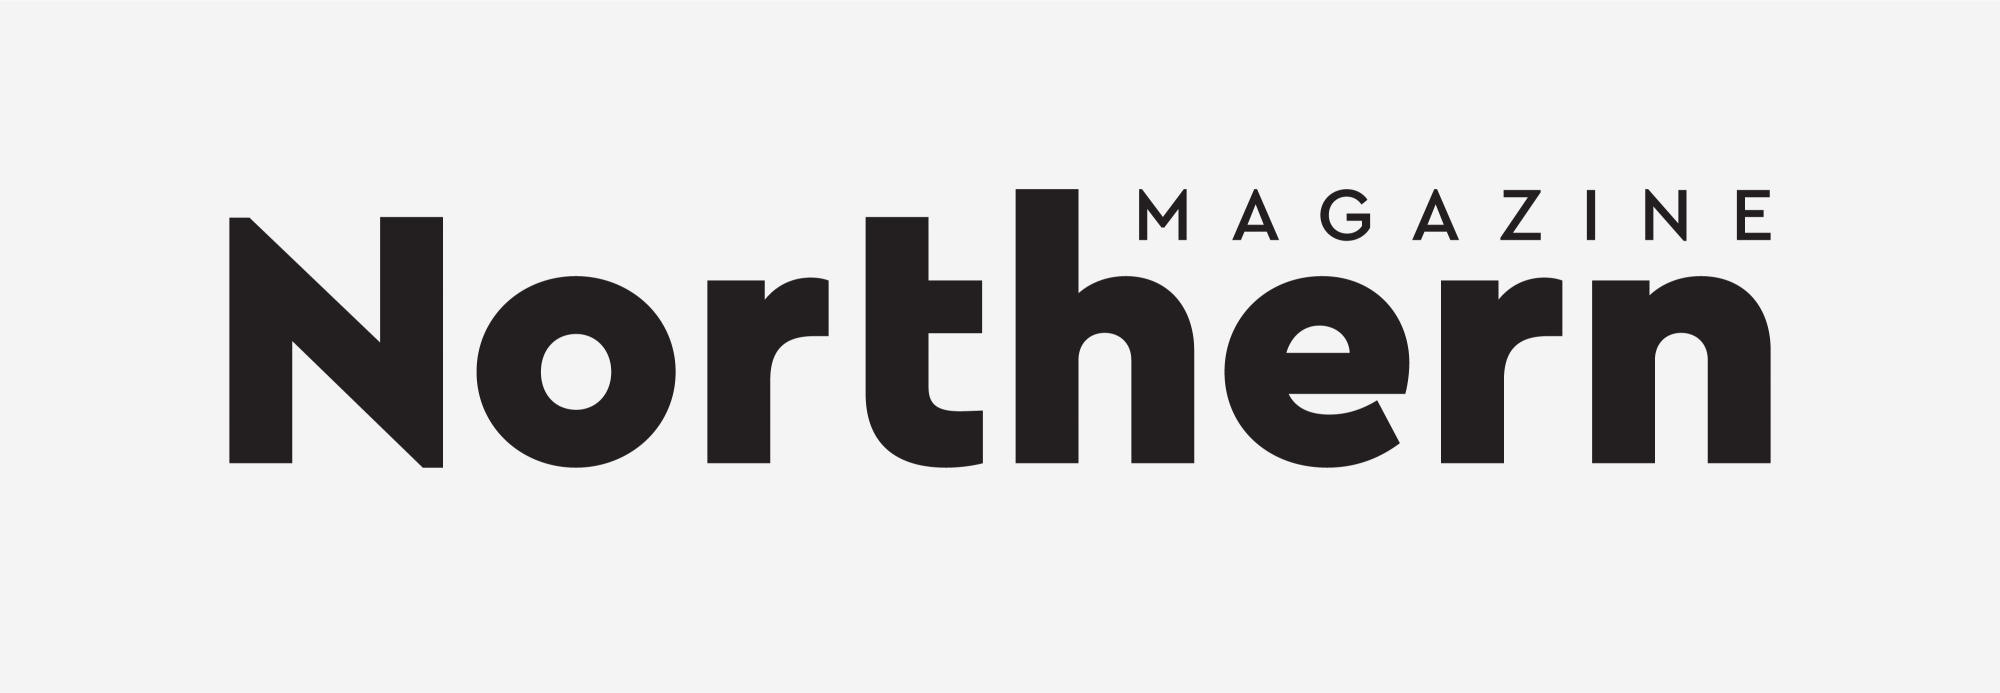 Northern Magazine Masthead